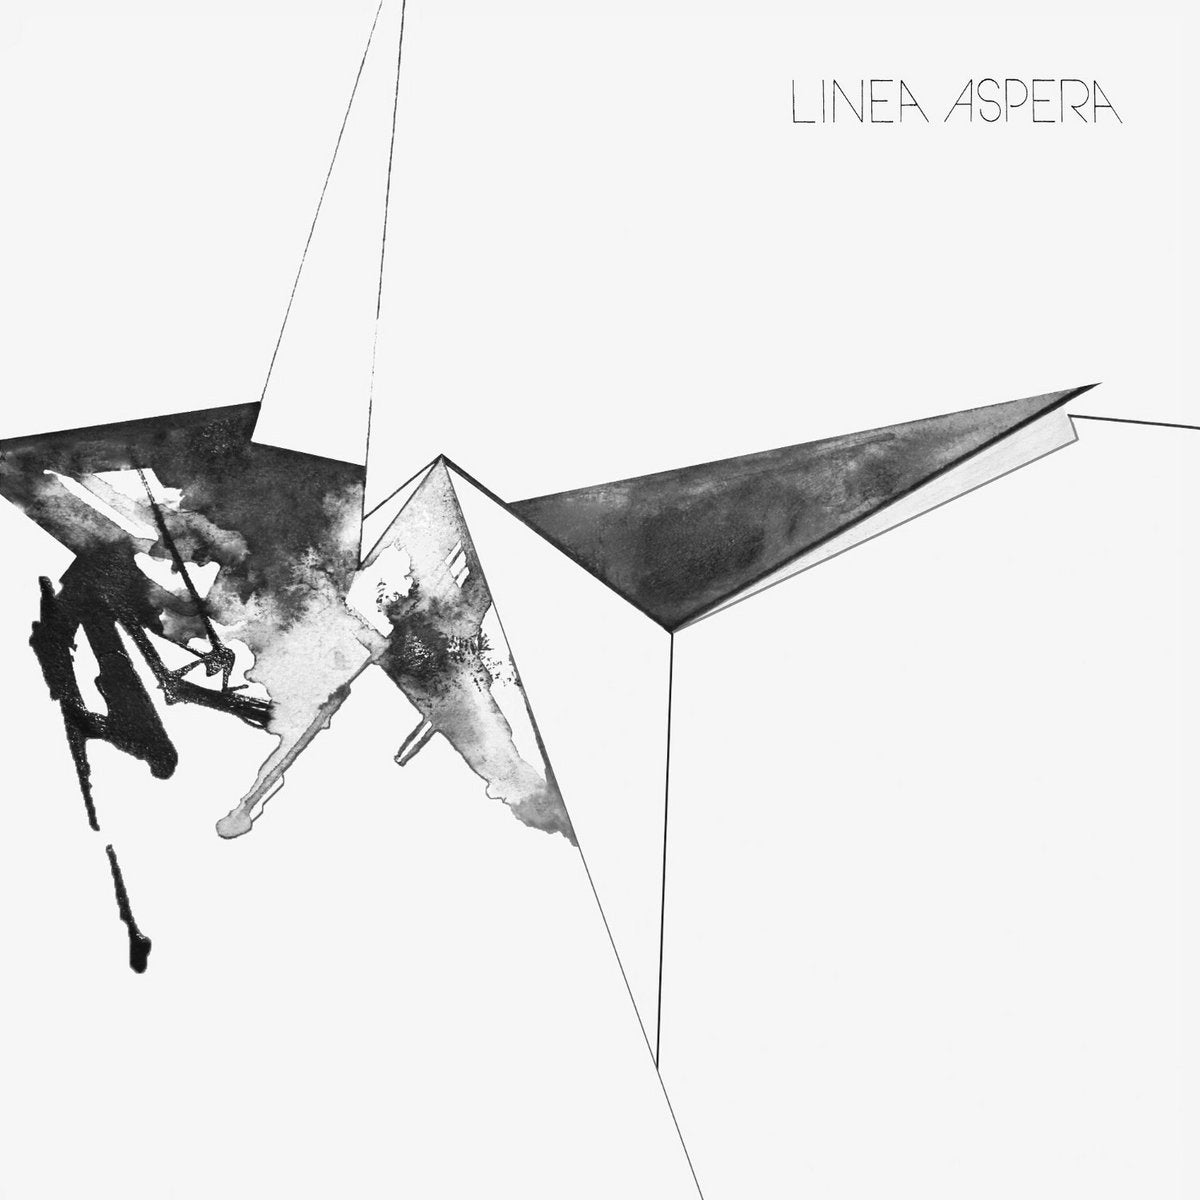 LINEA ASPERA - LINEA ASPERA Vinyl LP